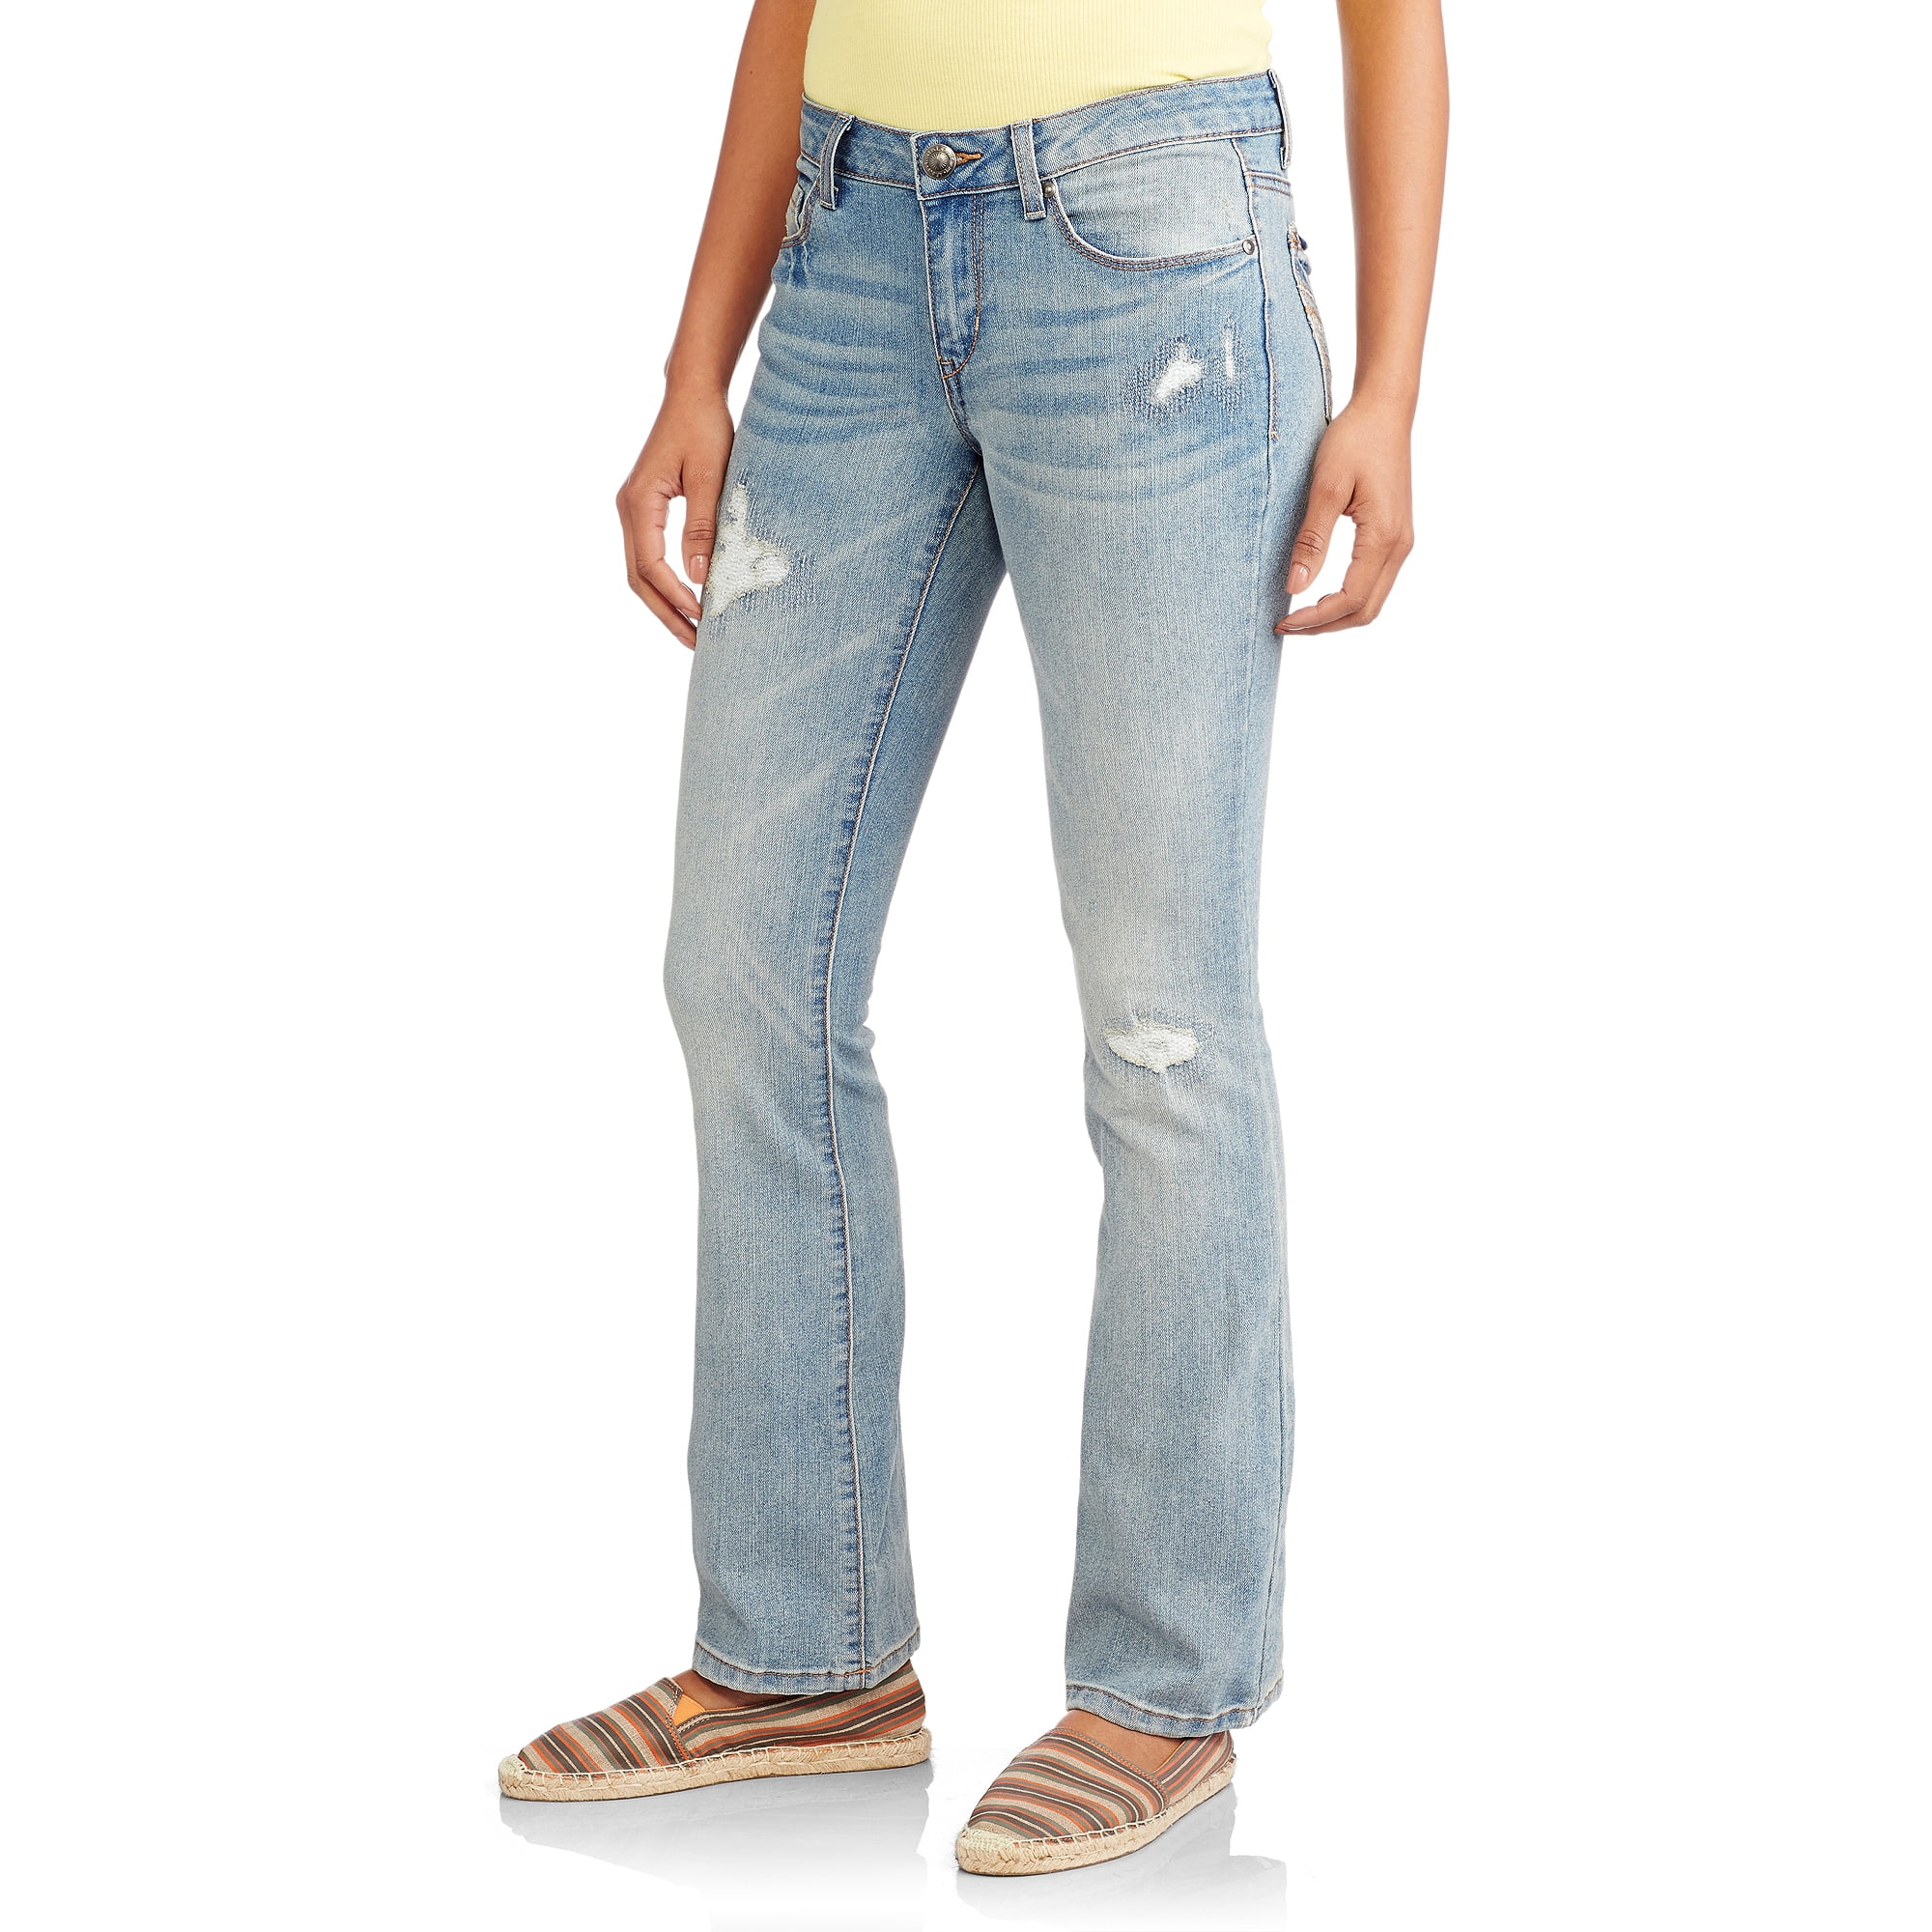 lei ashley jeans size 11